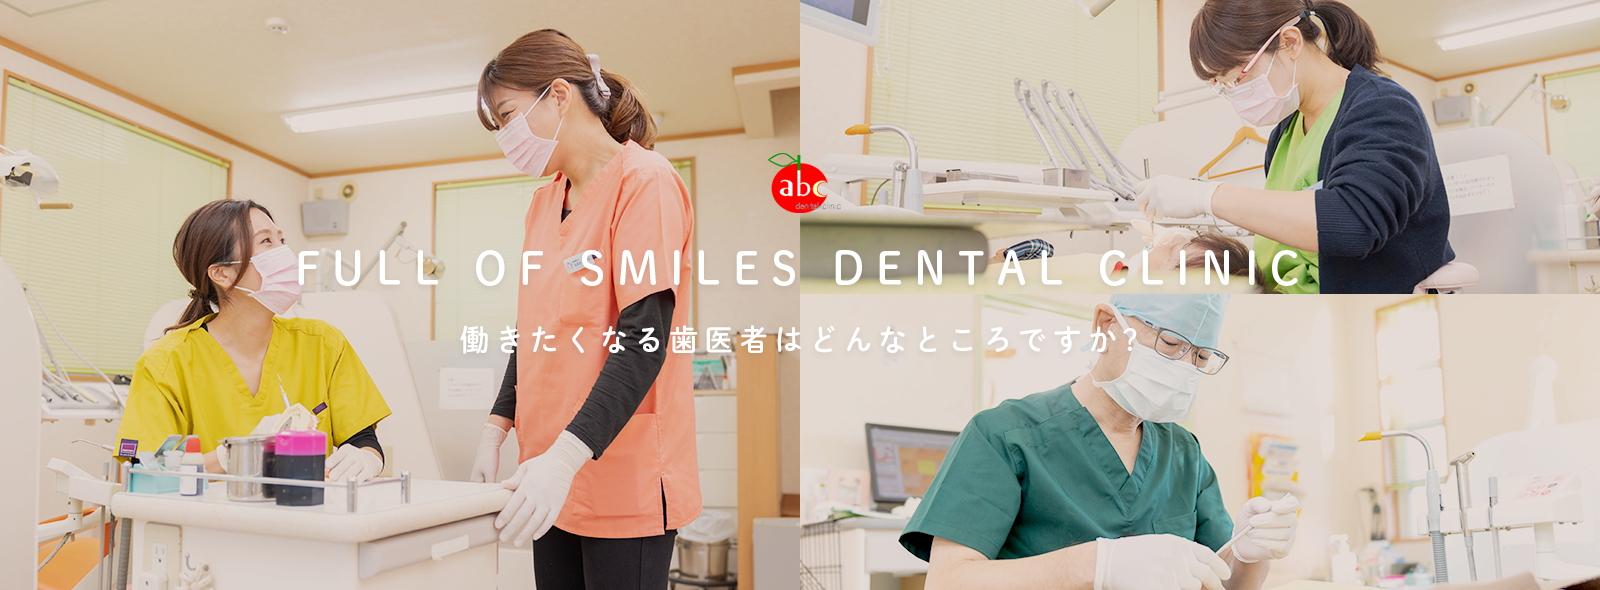 FULL OF SMILES DENTAL CLINIC 働きたくなる歯医者はどんなところですか?